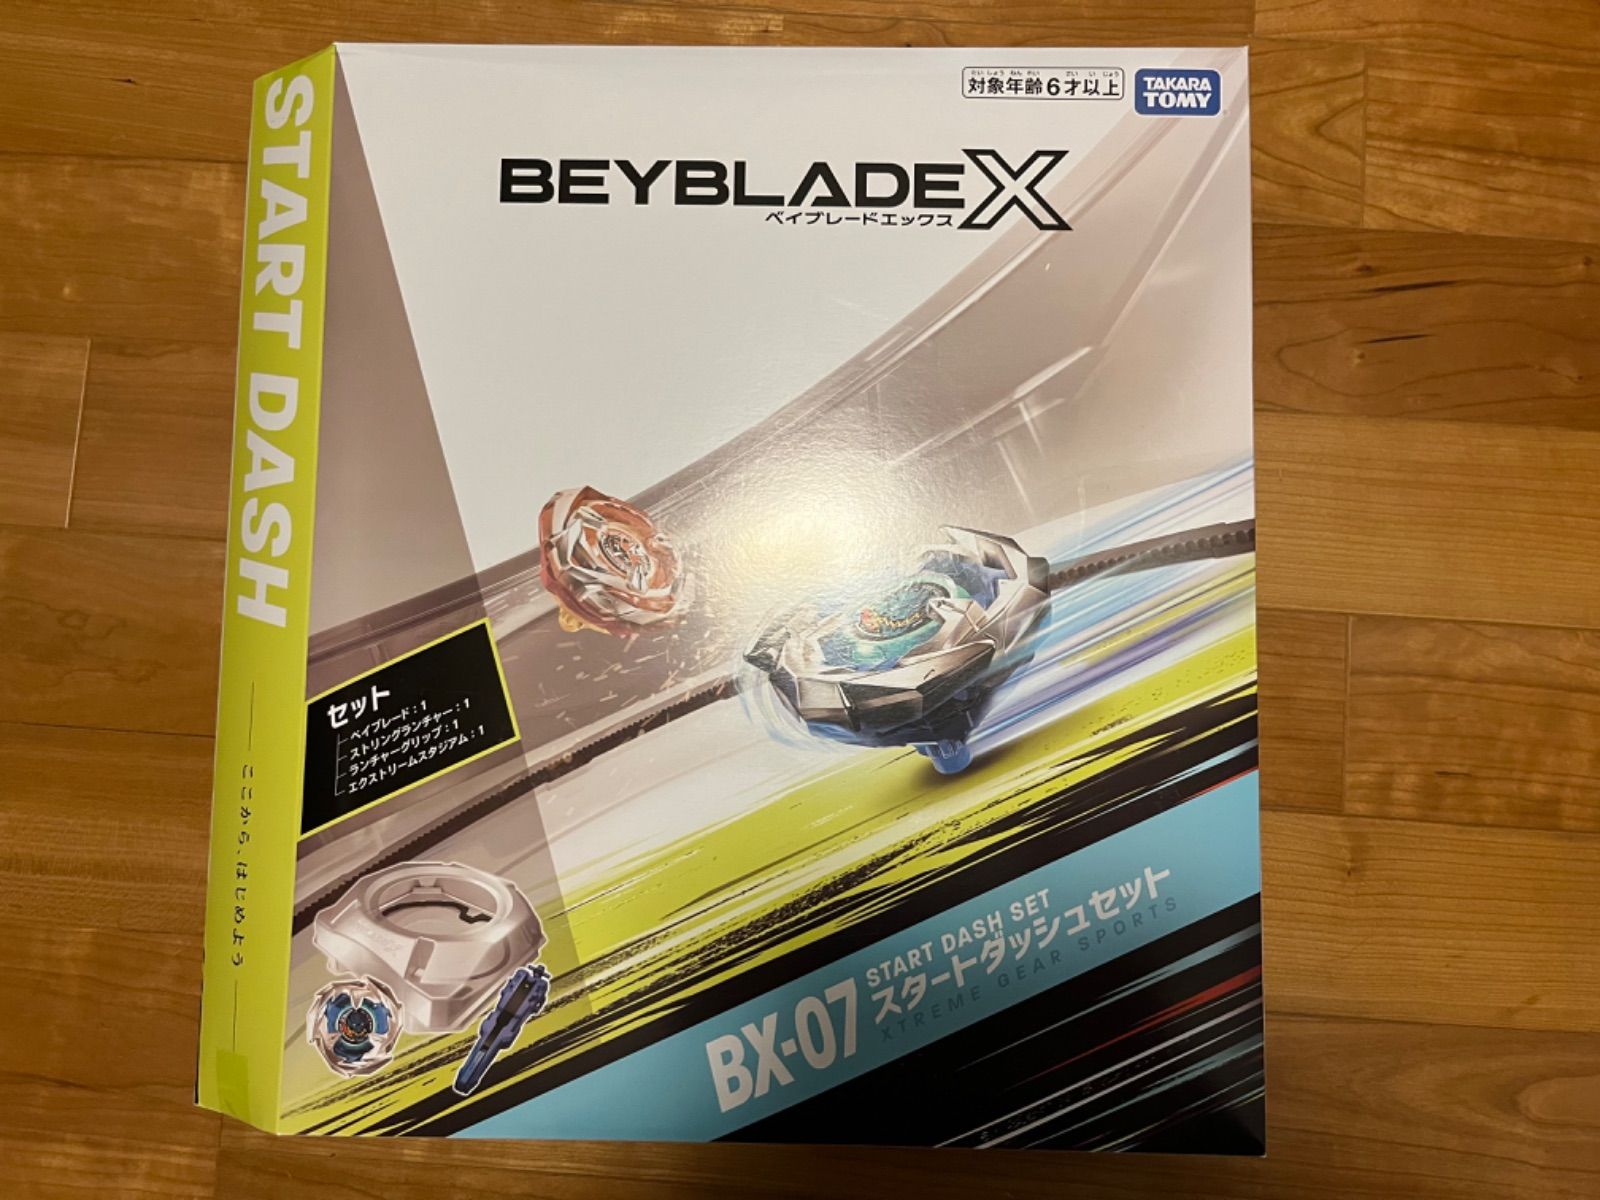 BEYBLADE X ベイブレードX BX-07 スタートダッシュセット - スポーツ 